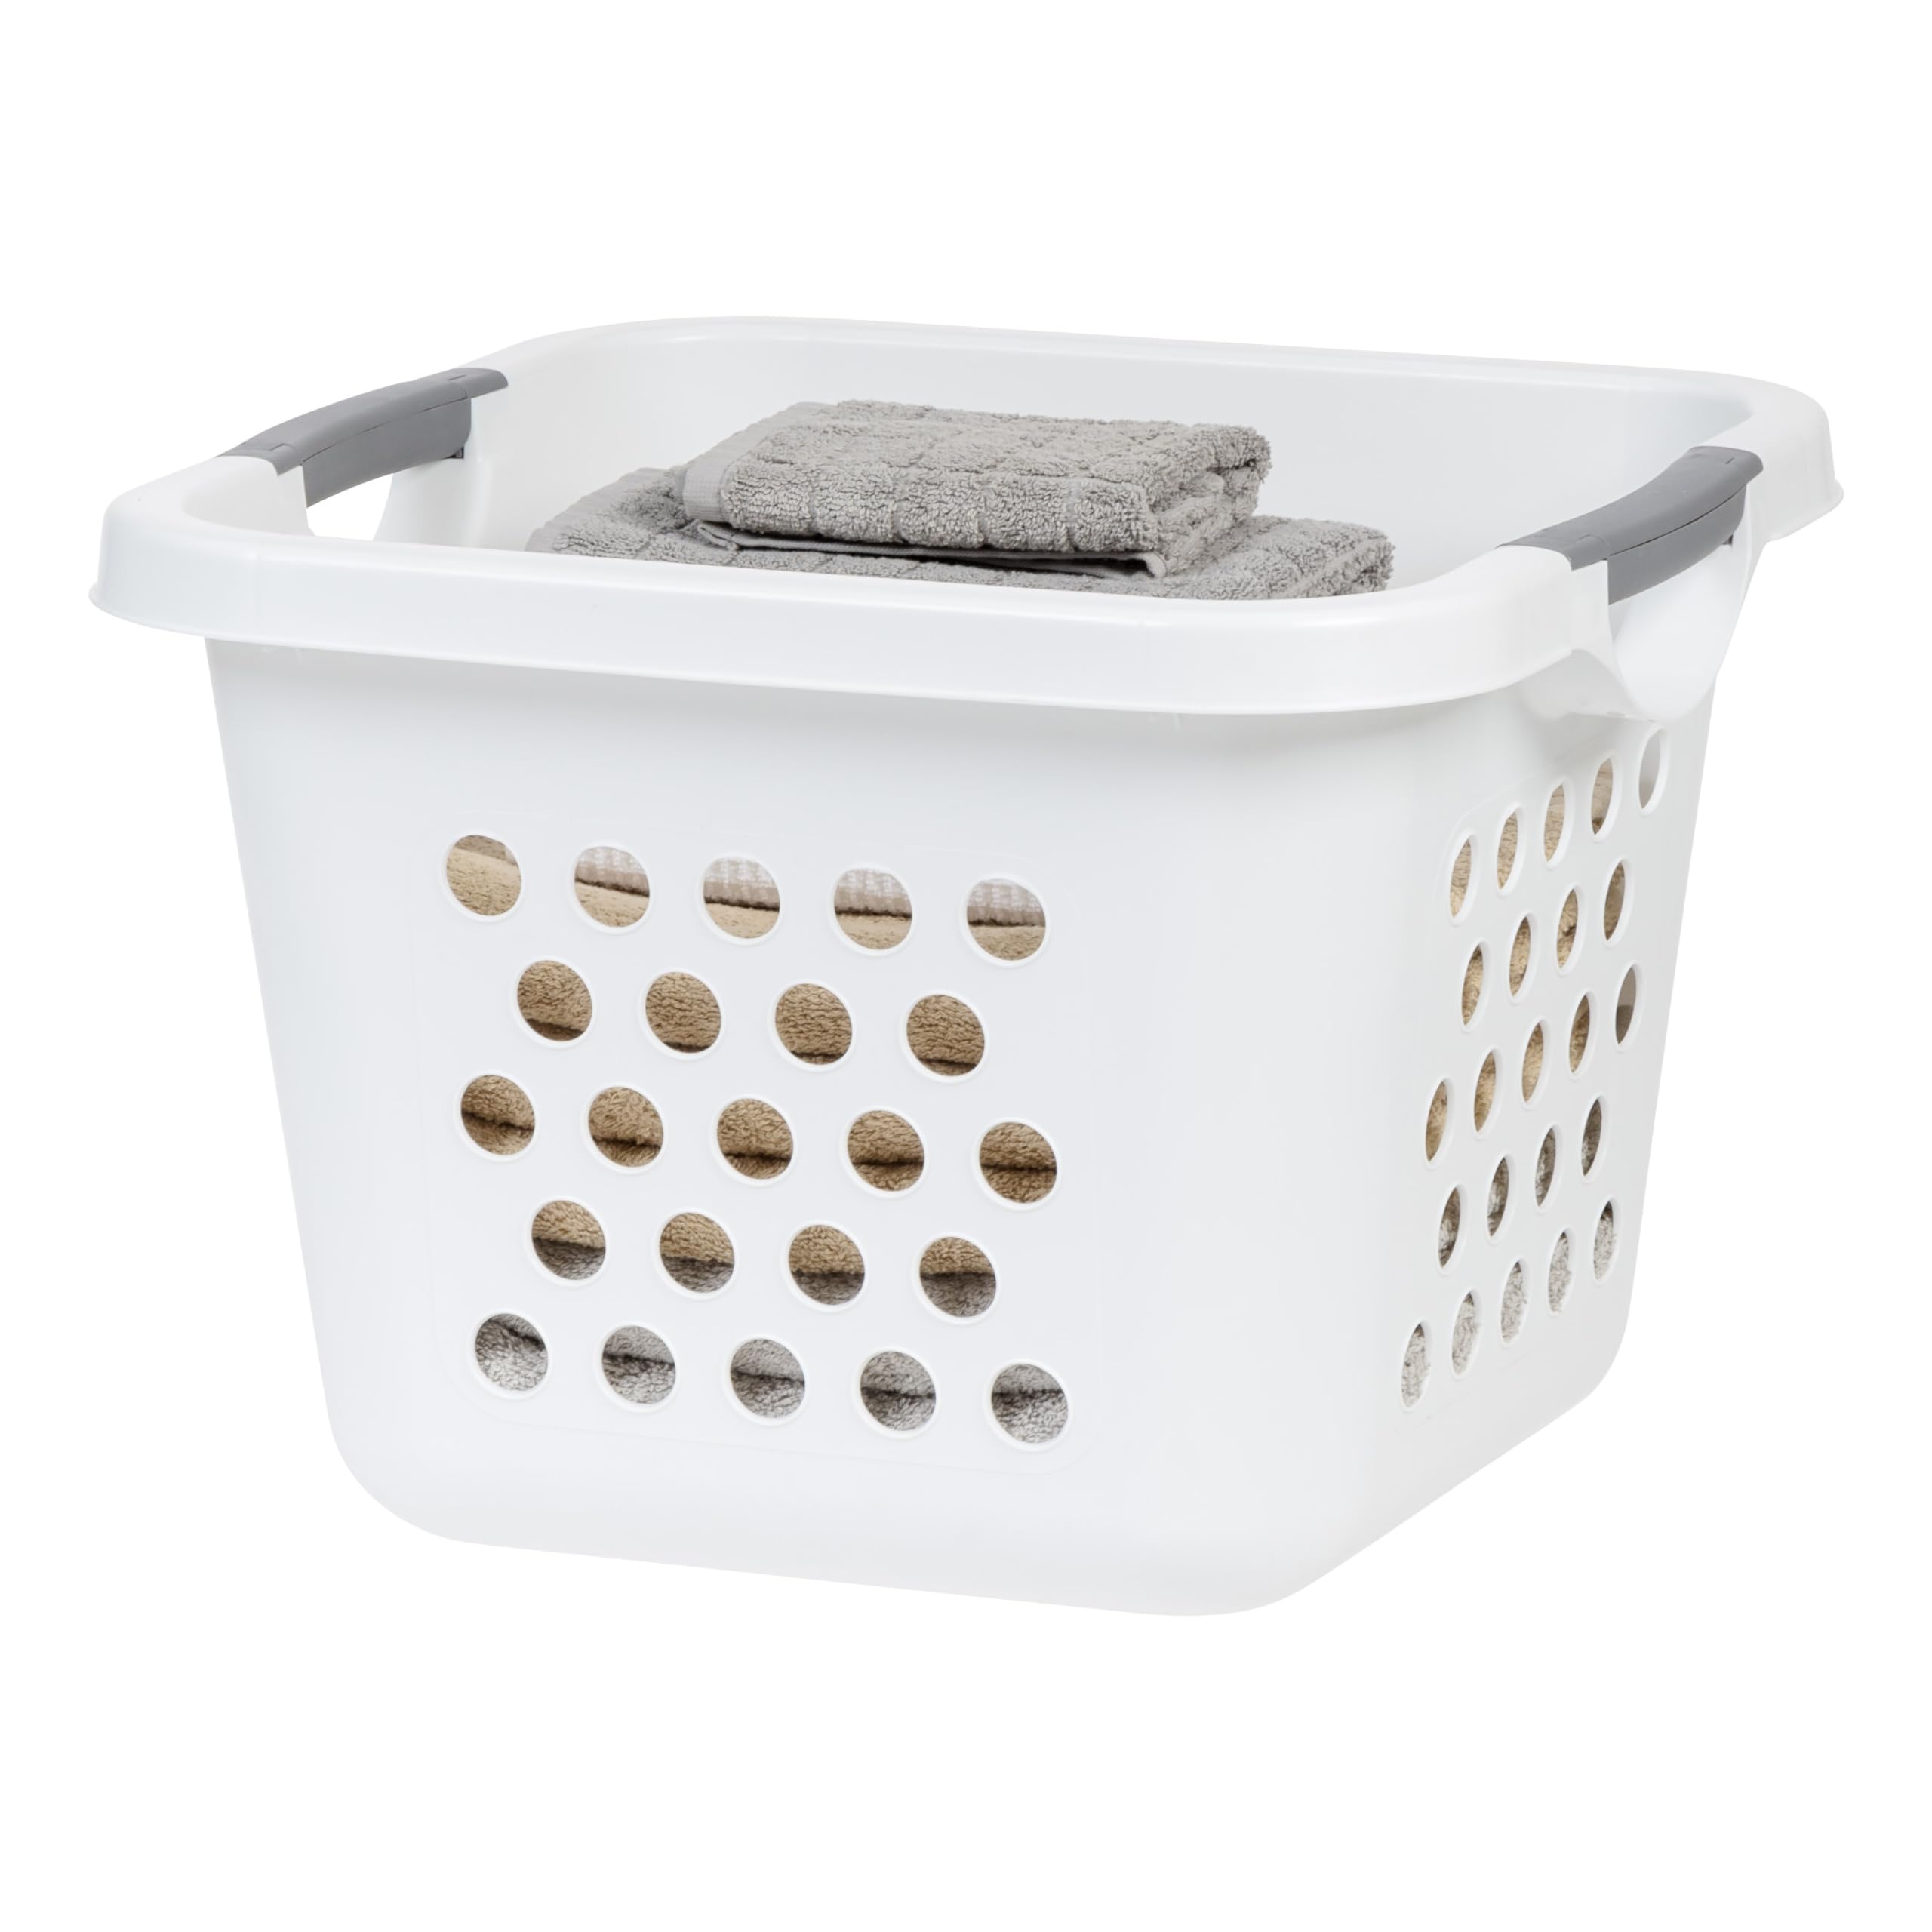 IRIS USA 30L Plastic Laundry Basket Hamper Organizer with Built-In Comfort Carry Handles, for Closet, Dorm, Laundry Room, Bedroom, Nestable, Ventilation Holes, 1 Pack, Medium, White